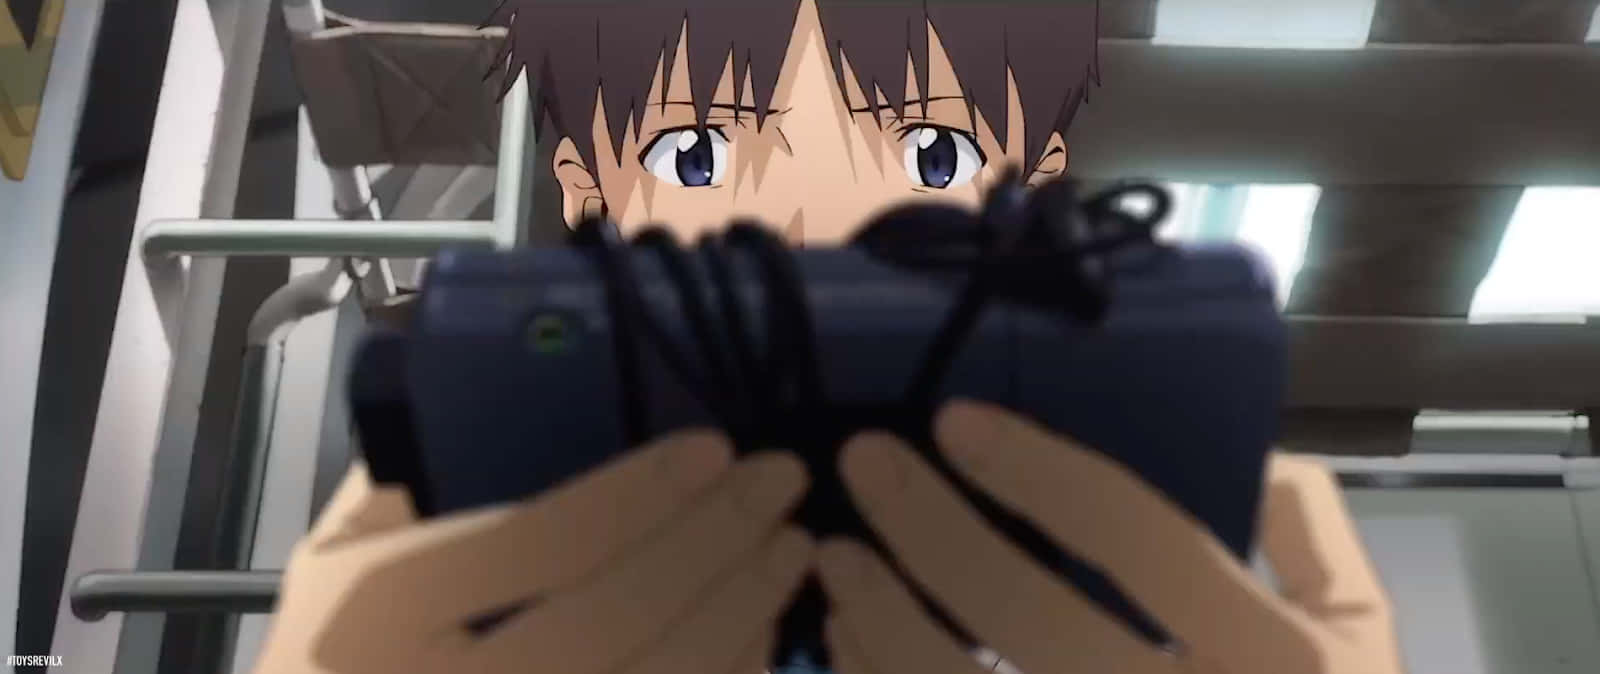 Evangelion 30 10 Shinji Holding A Device Wallpaper